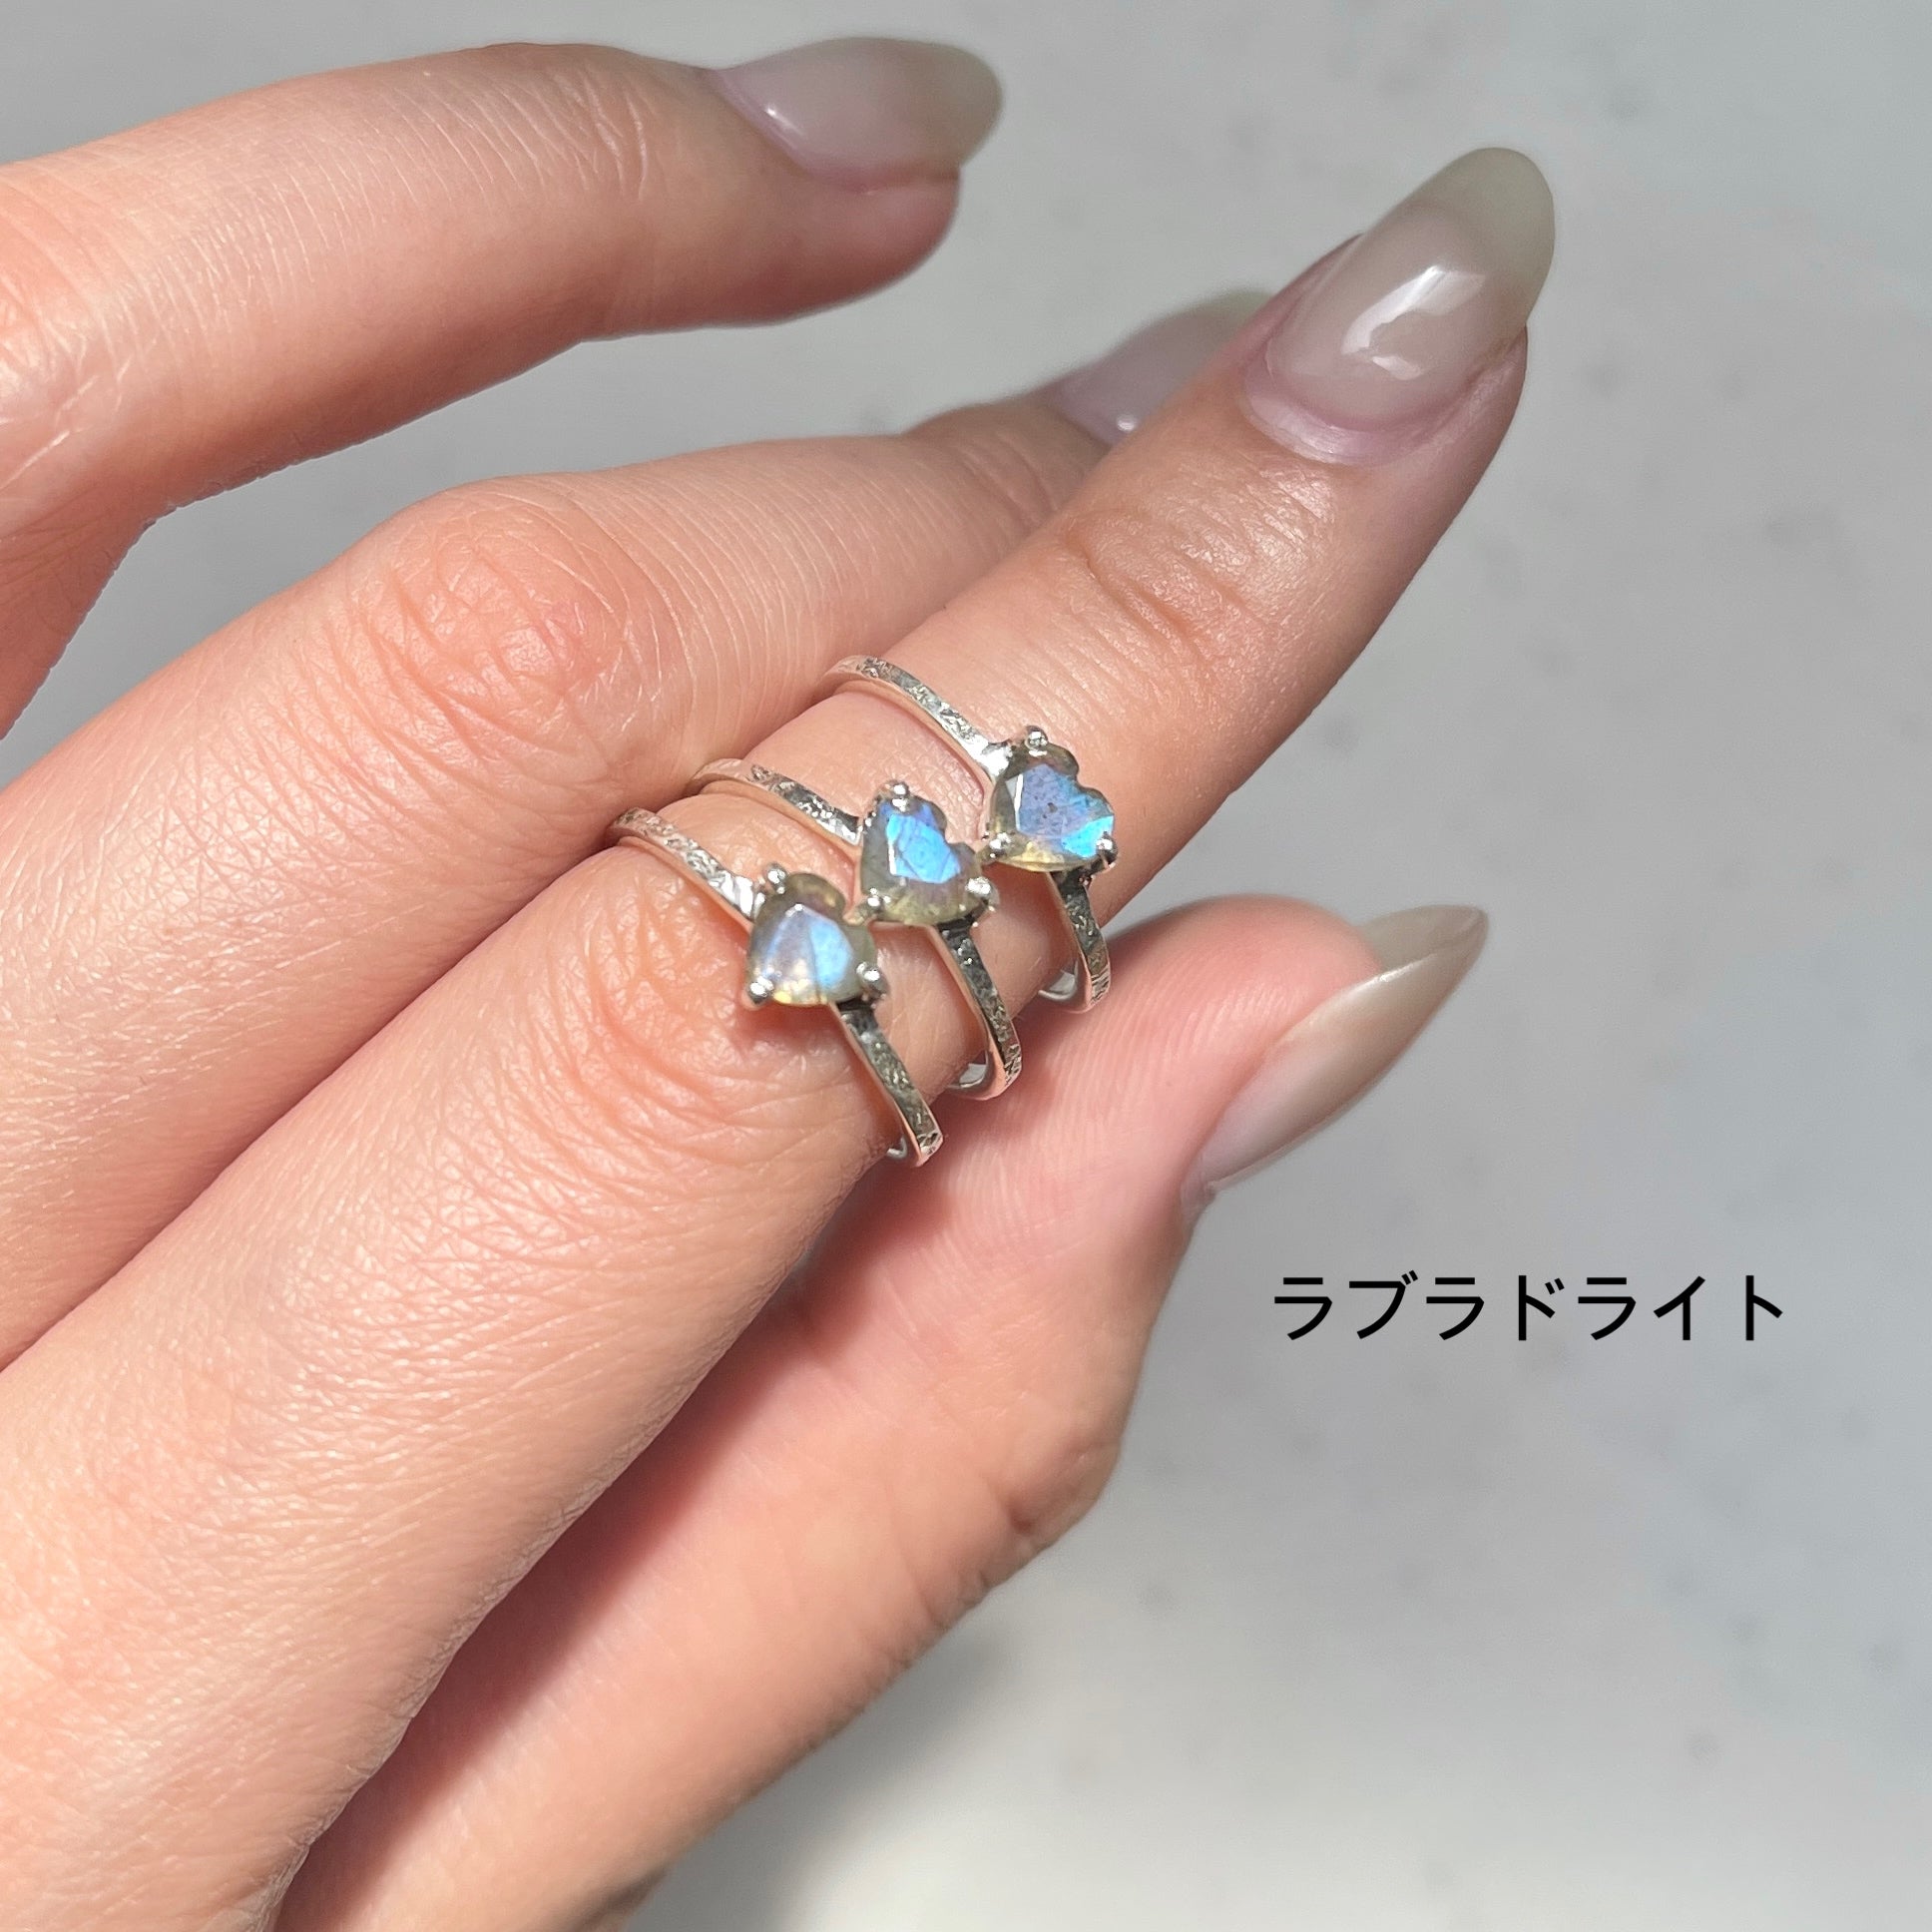 Silver925 Heart petit ring – Biju mam